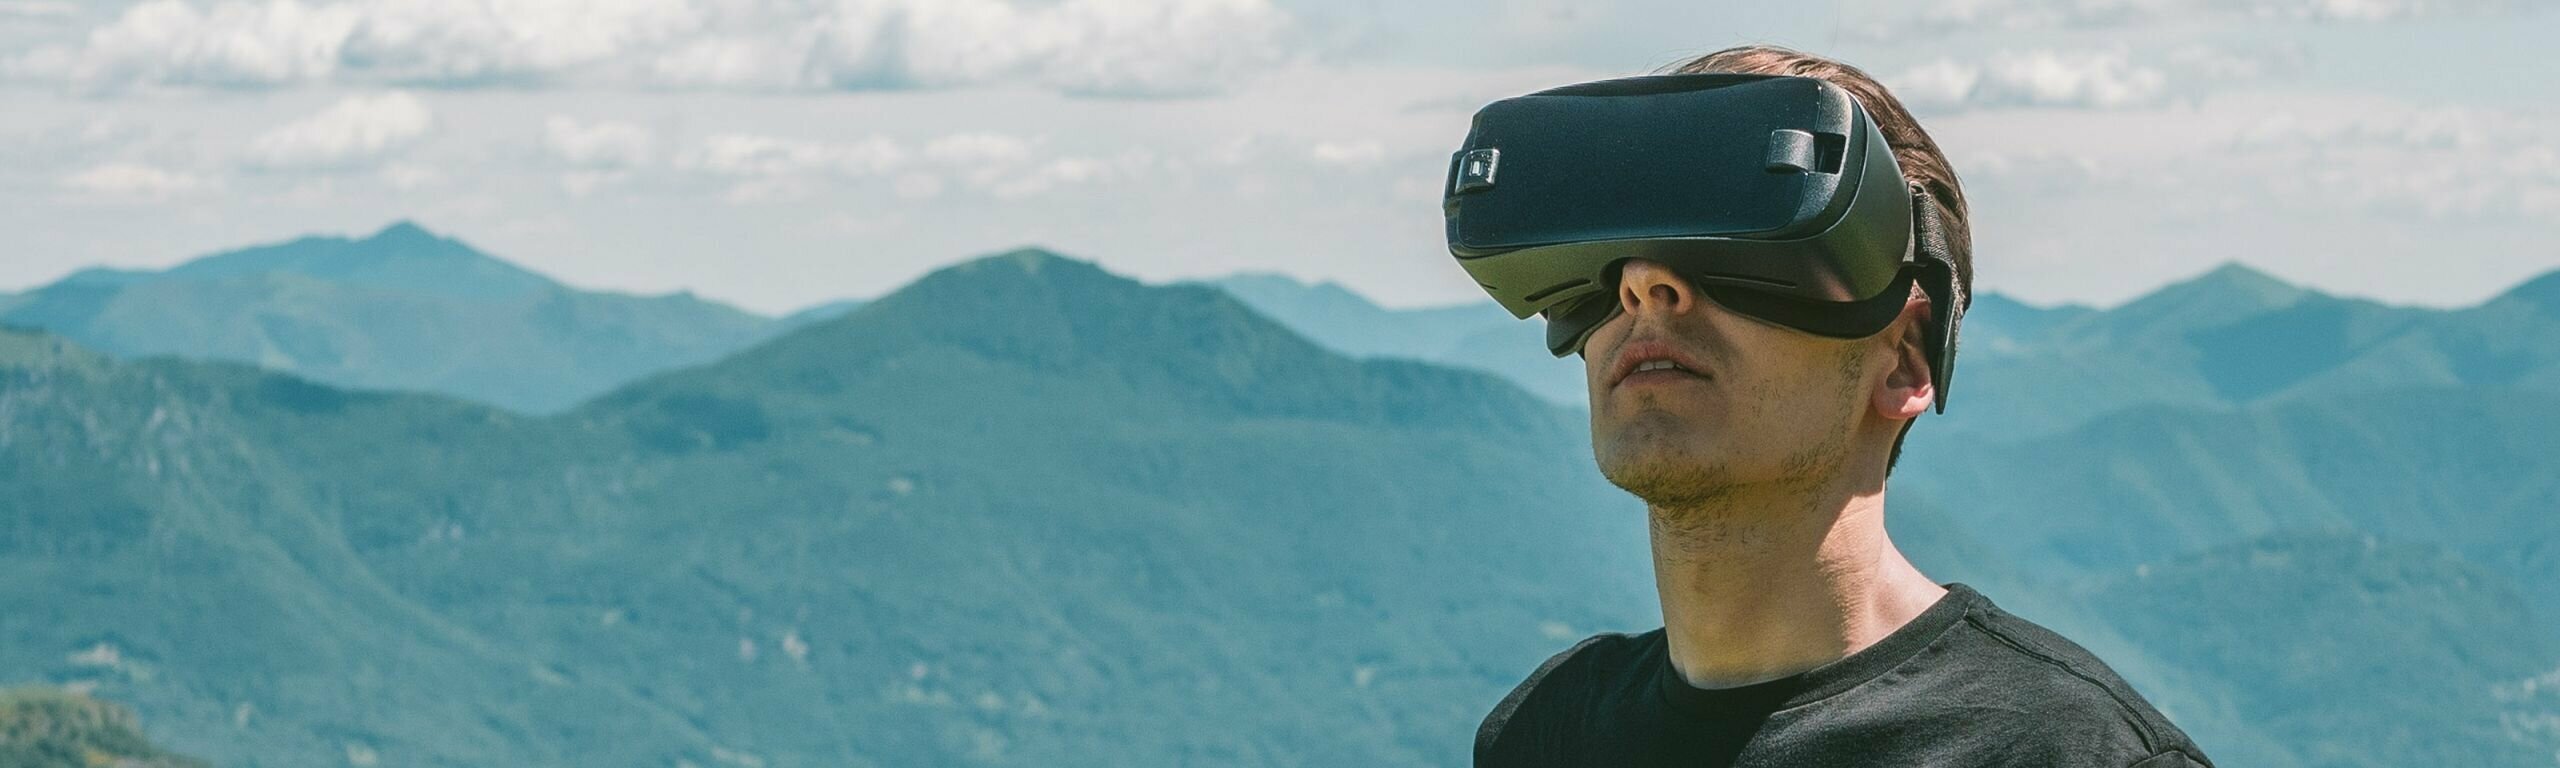 Invitation au voyage avec la nouvelle appli Virtual Reality CFF